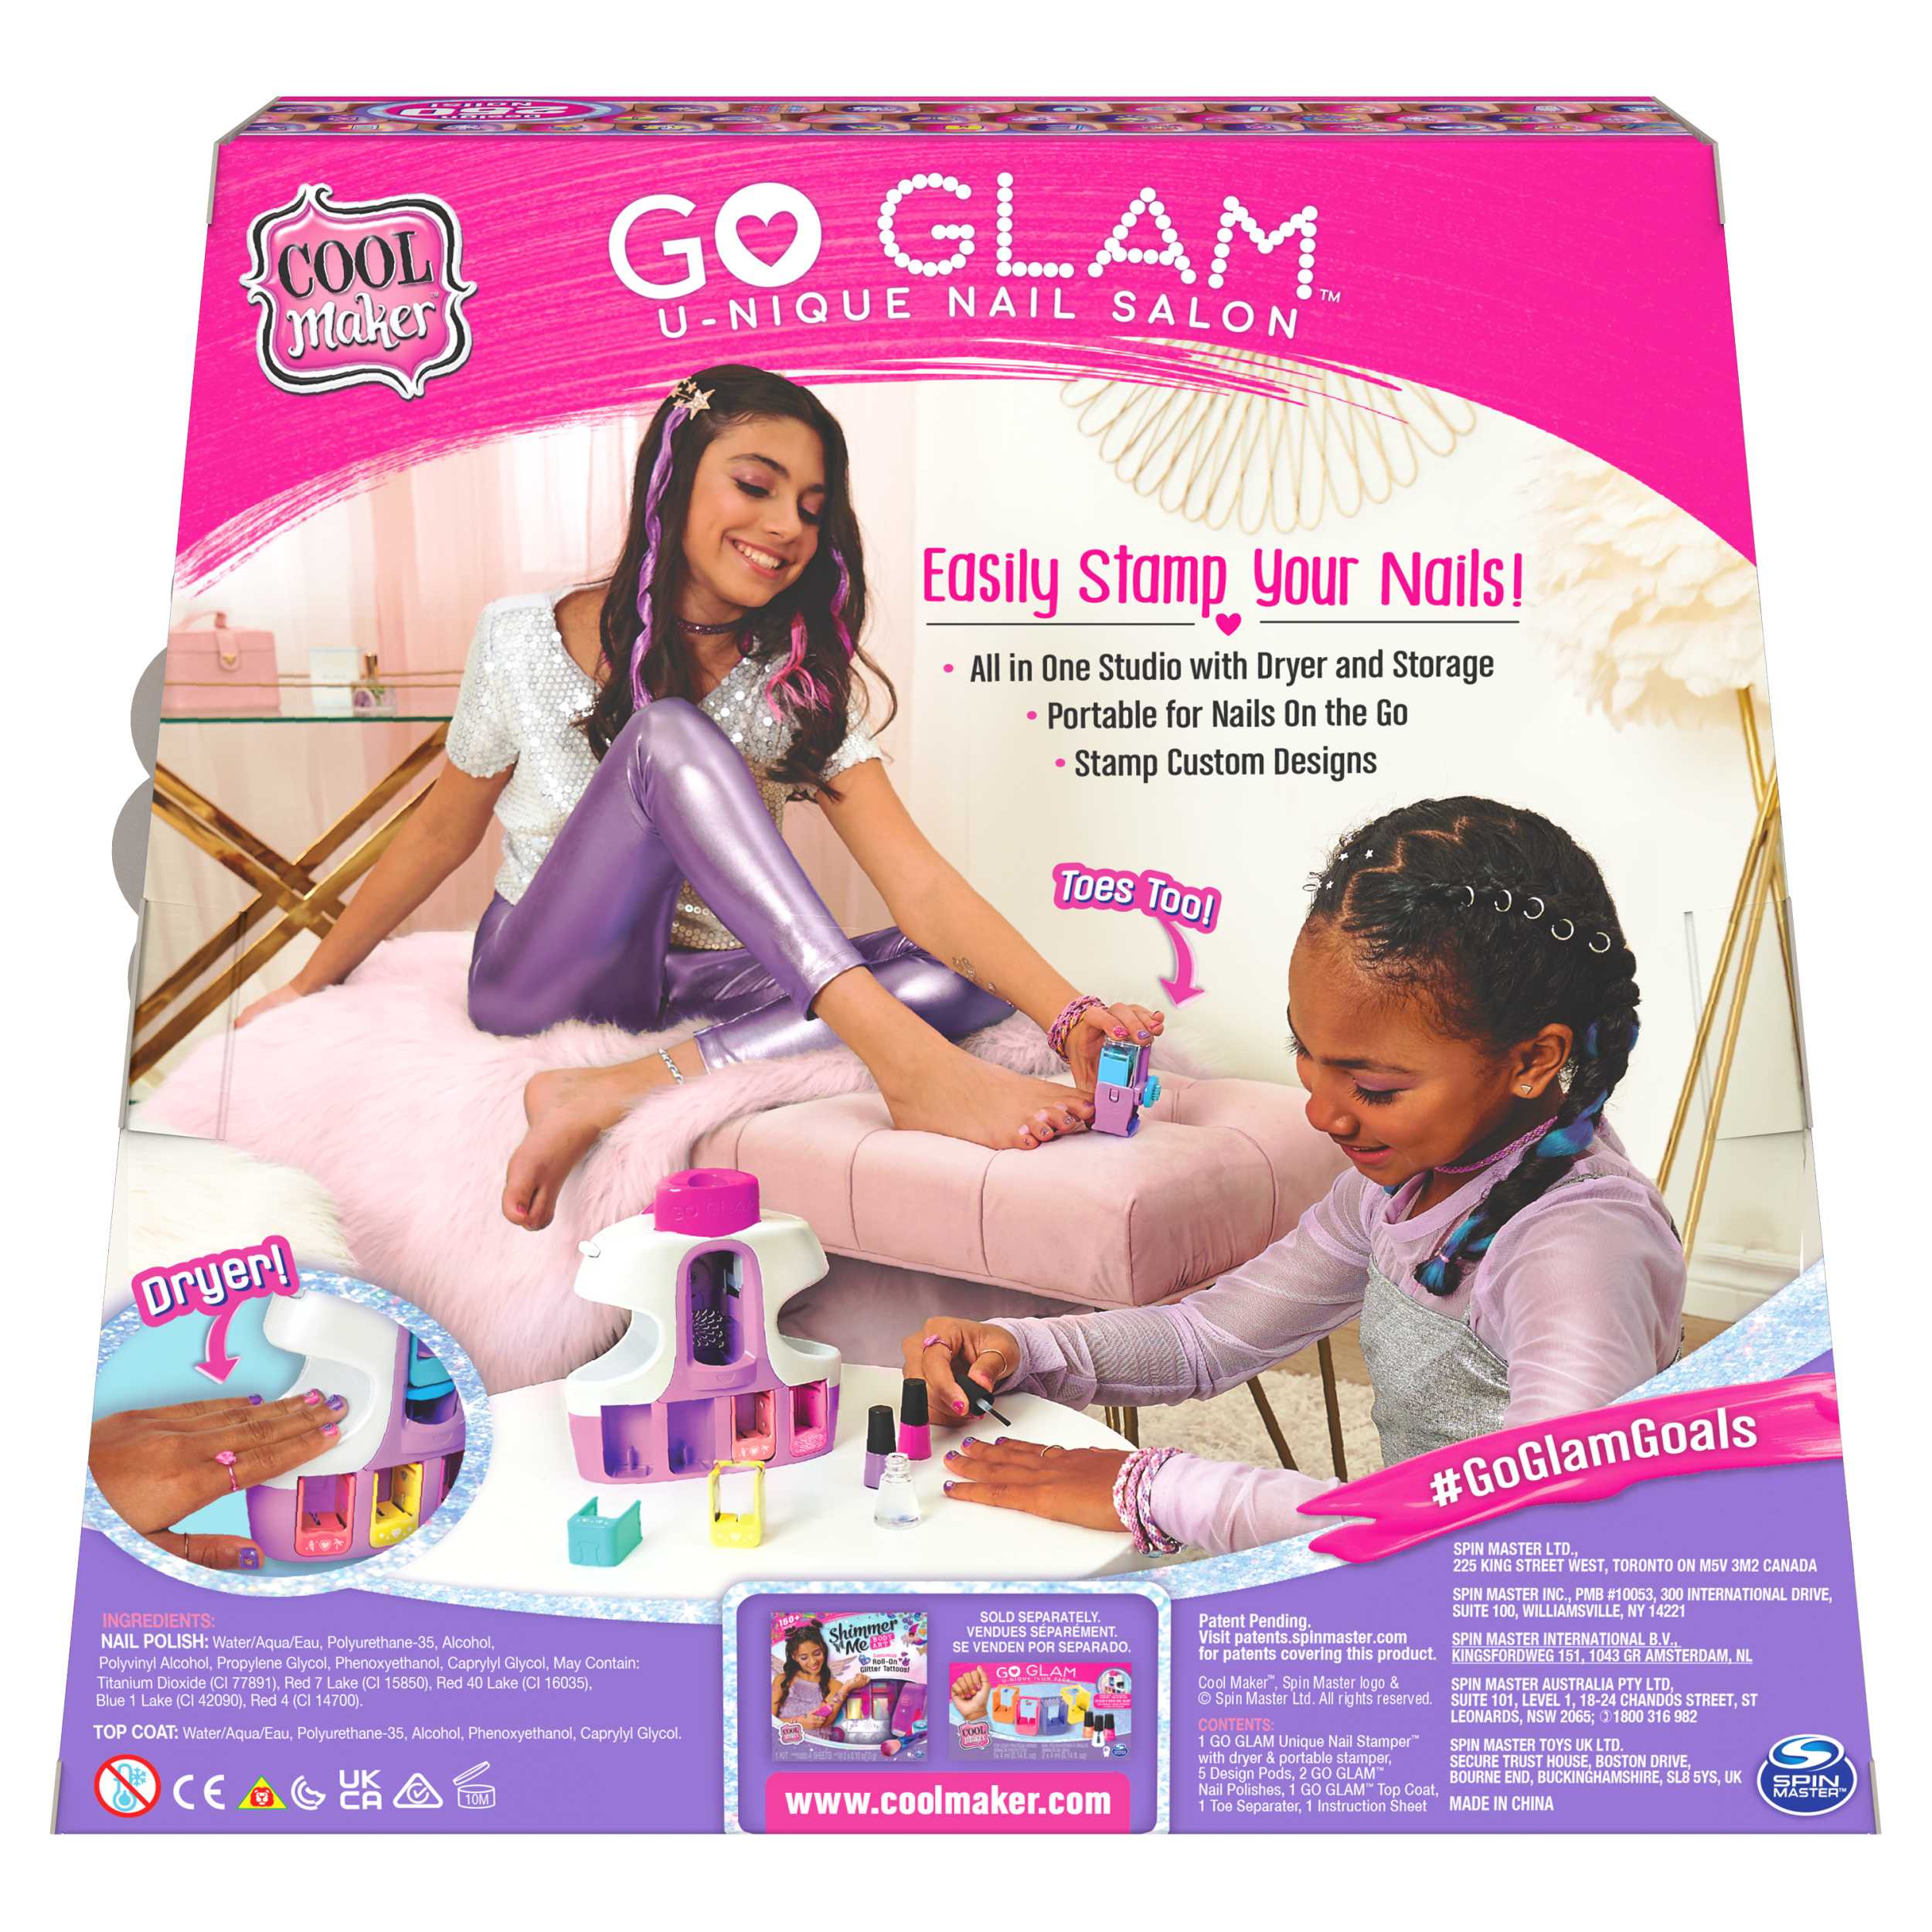 GO GLAM U-nique Nail Salon with Portable Stamper